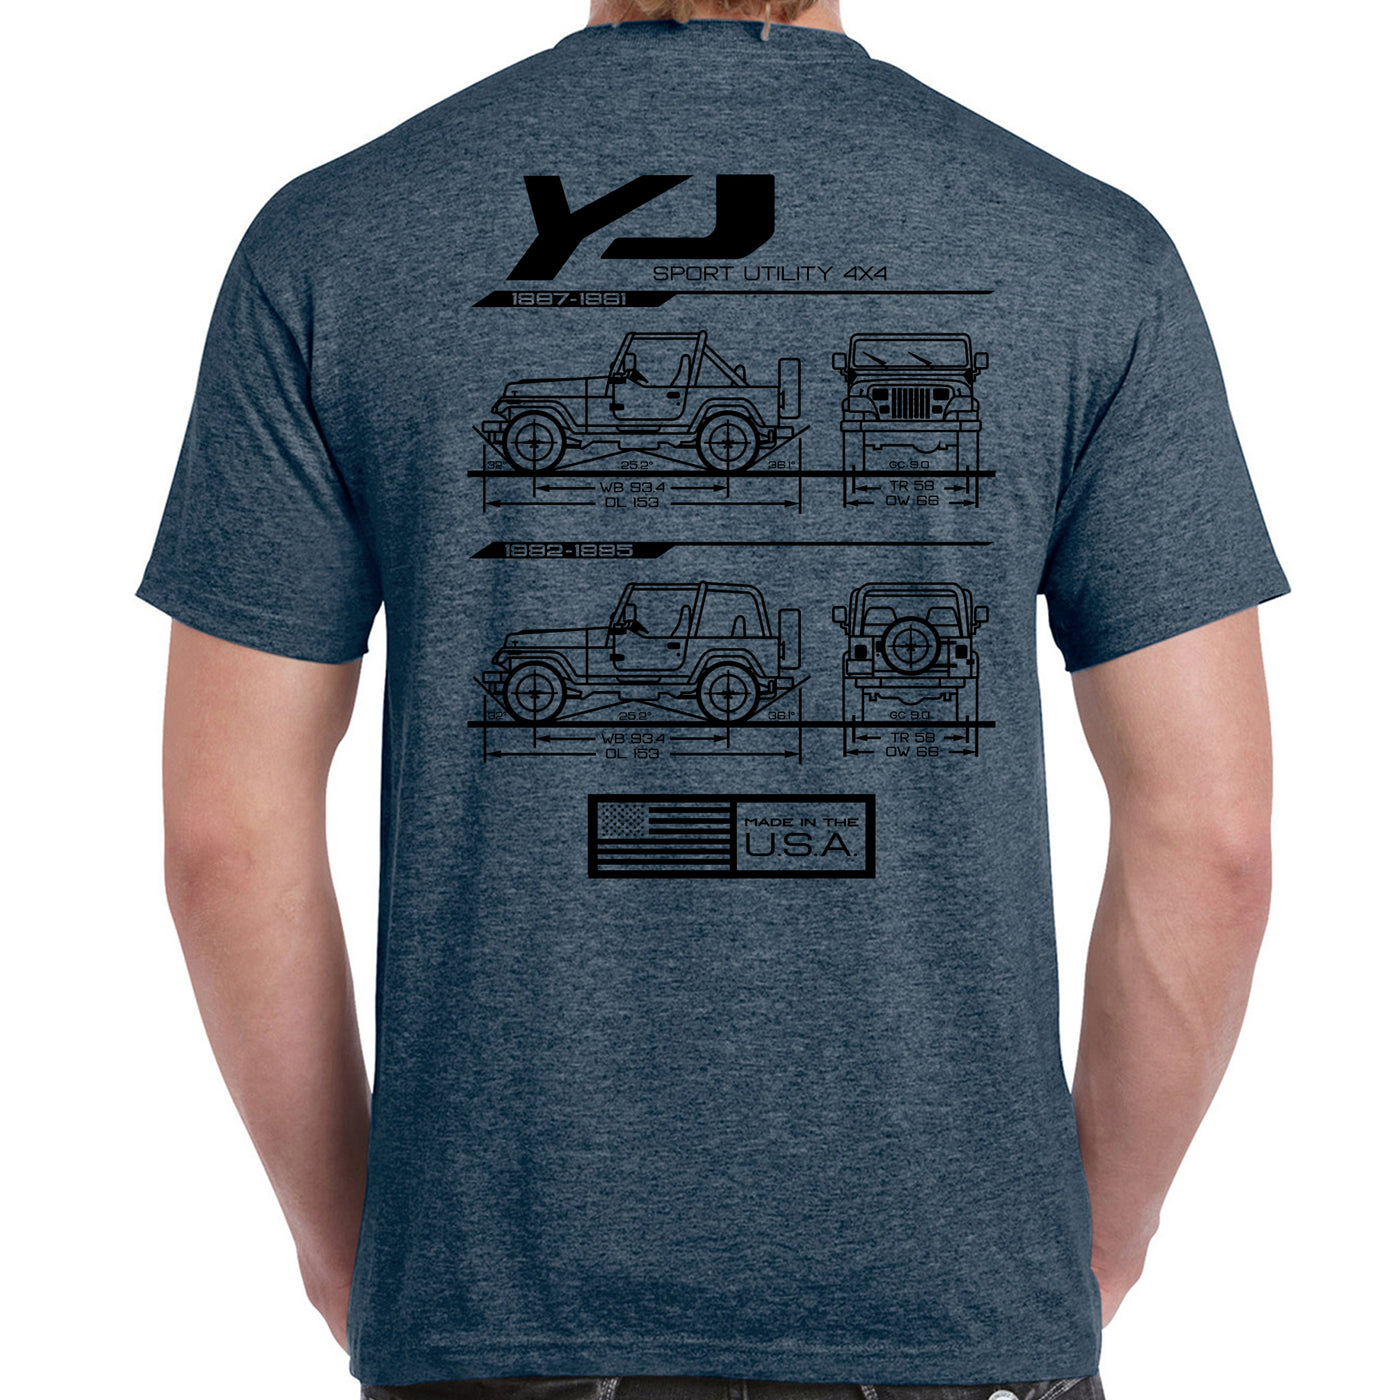 YJ Blueprint T-Shirt